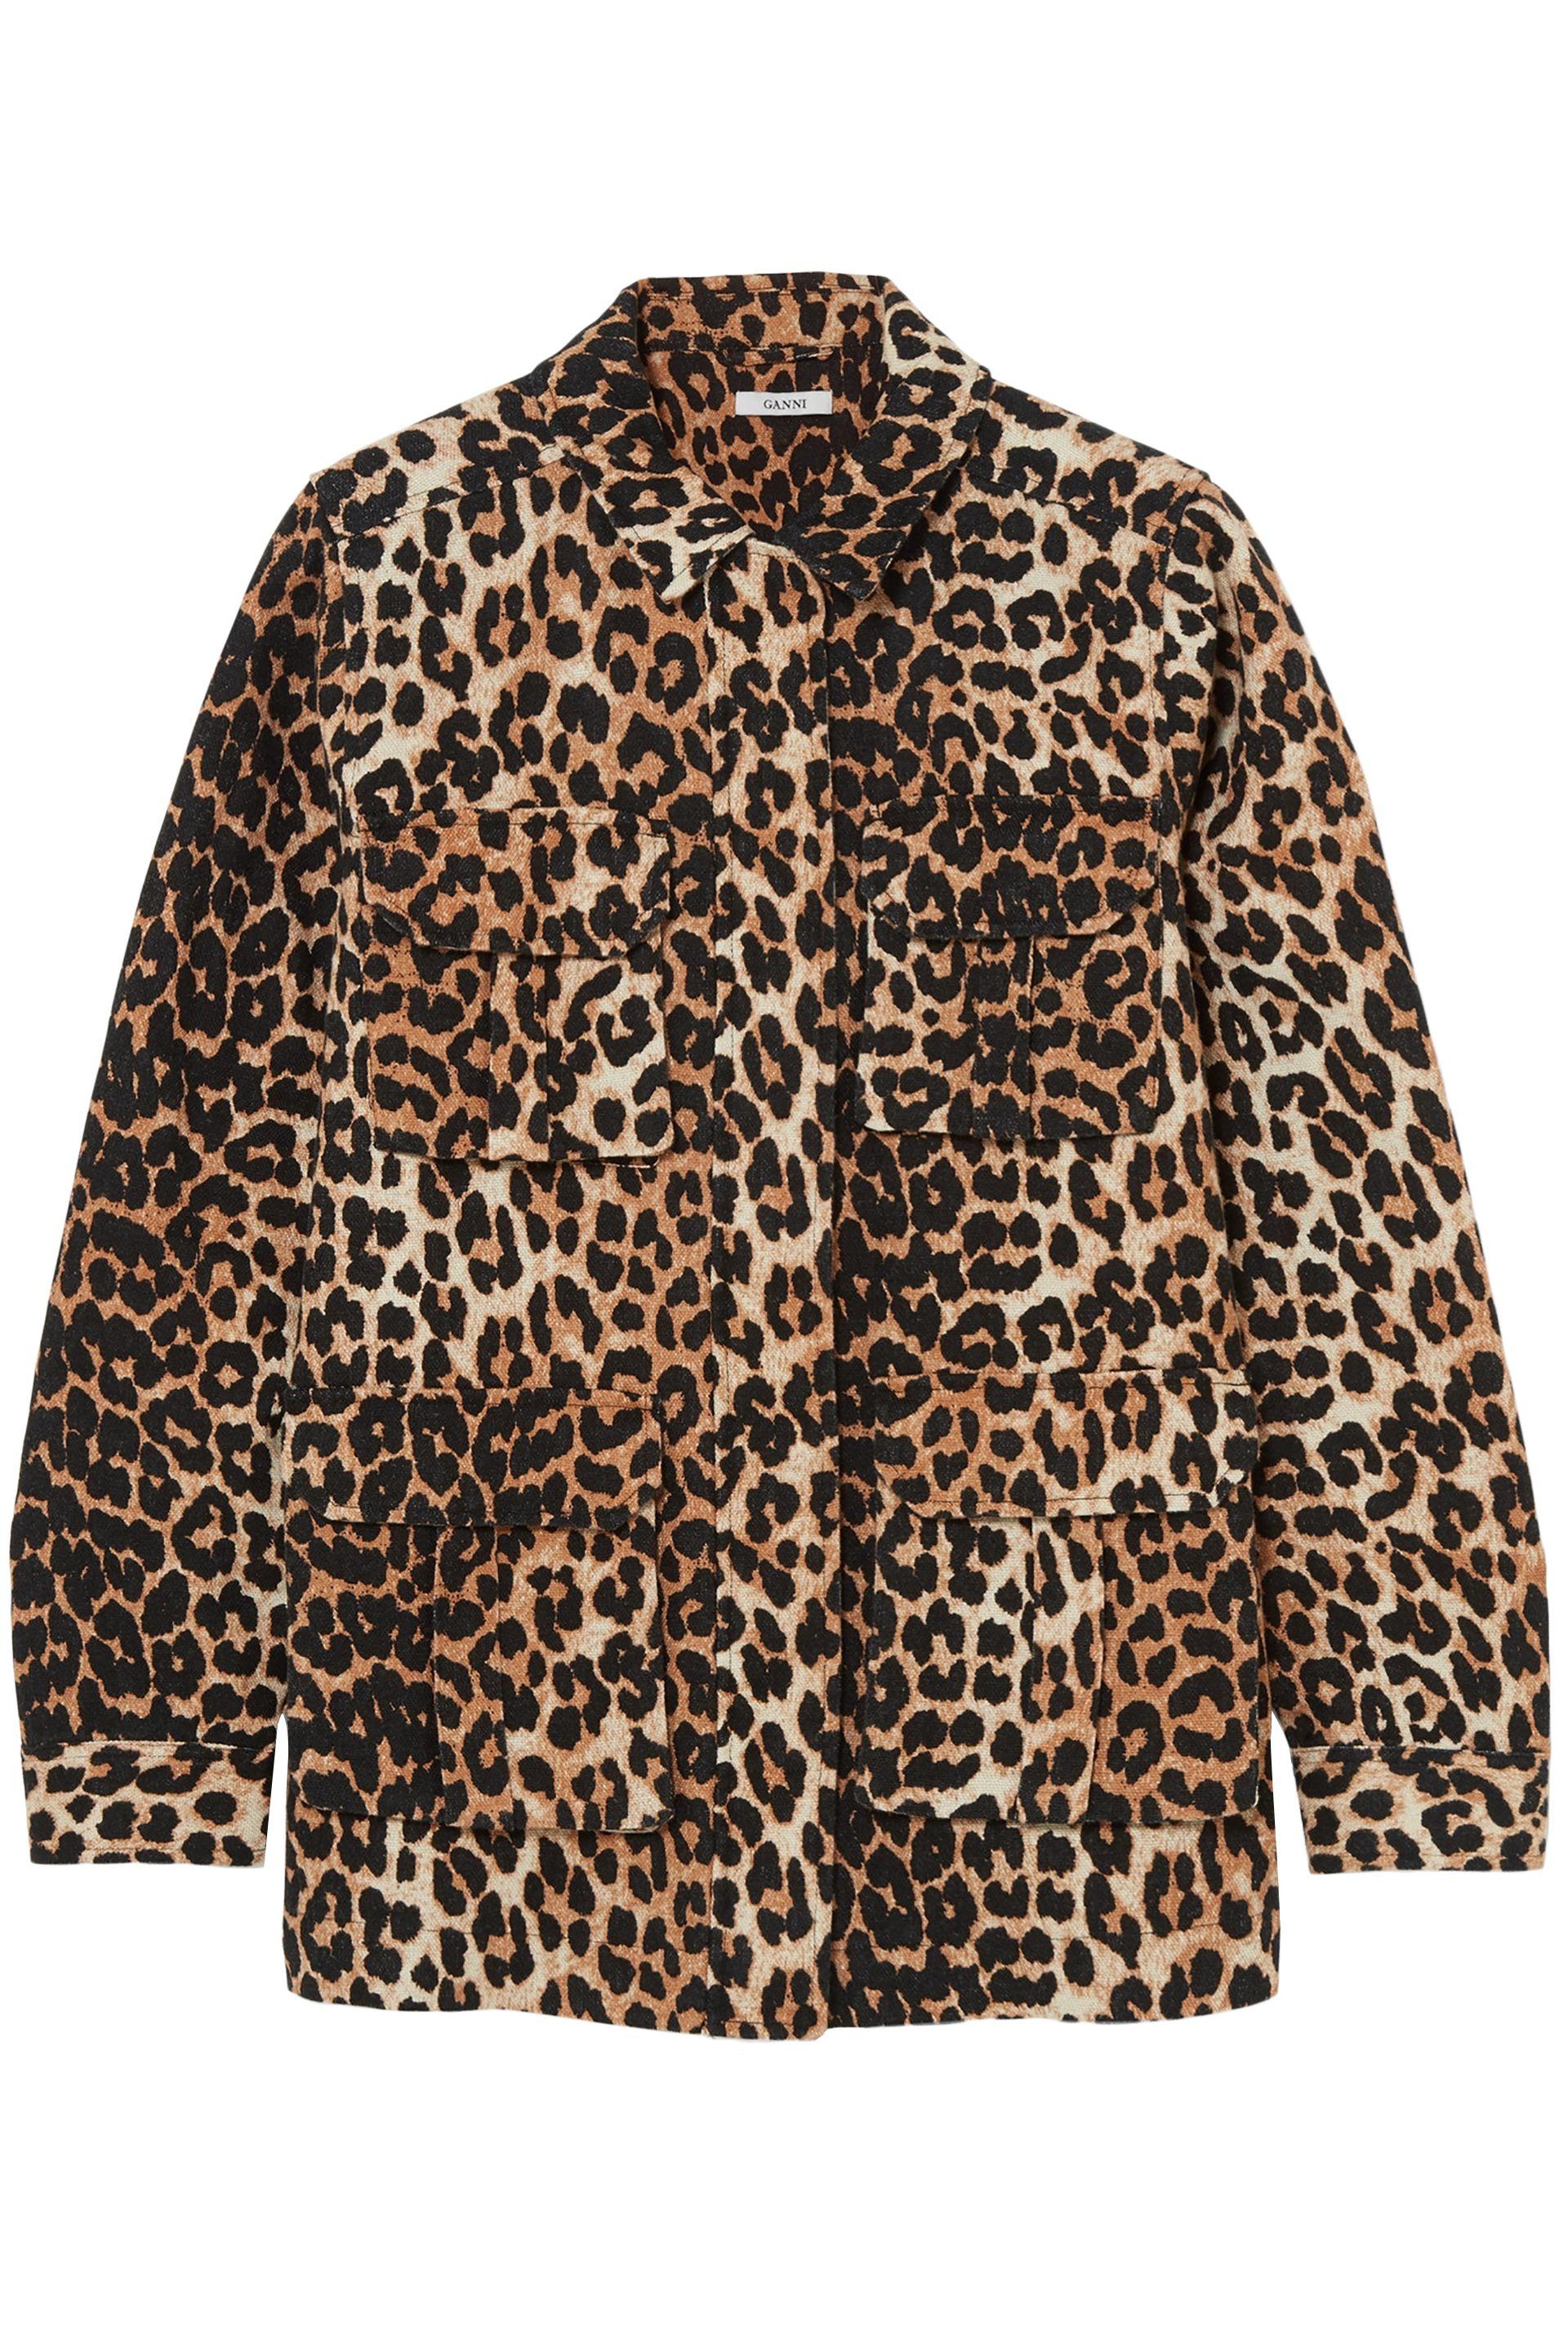 Lyst - Ganni Woman Camberwell Leopard-print Linen And Cotton-blend ...